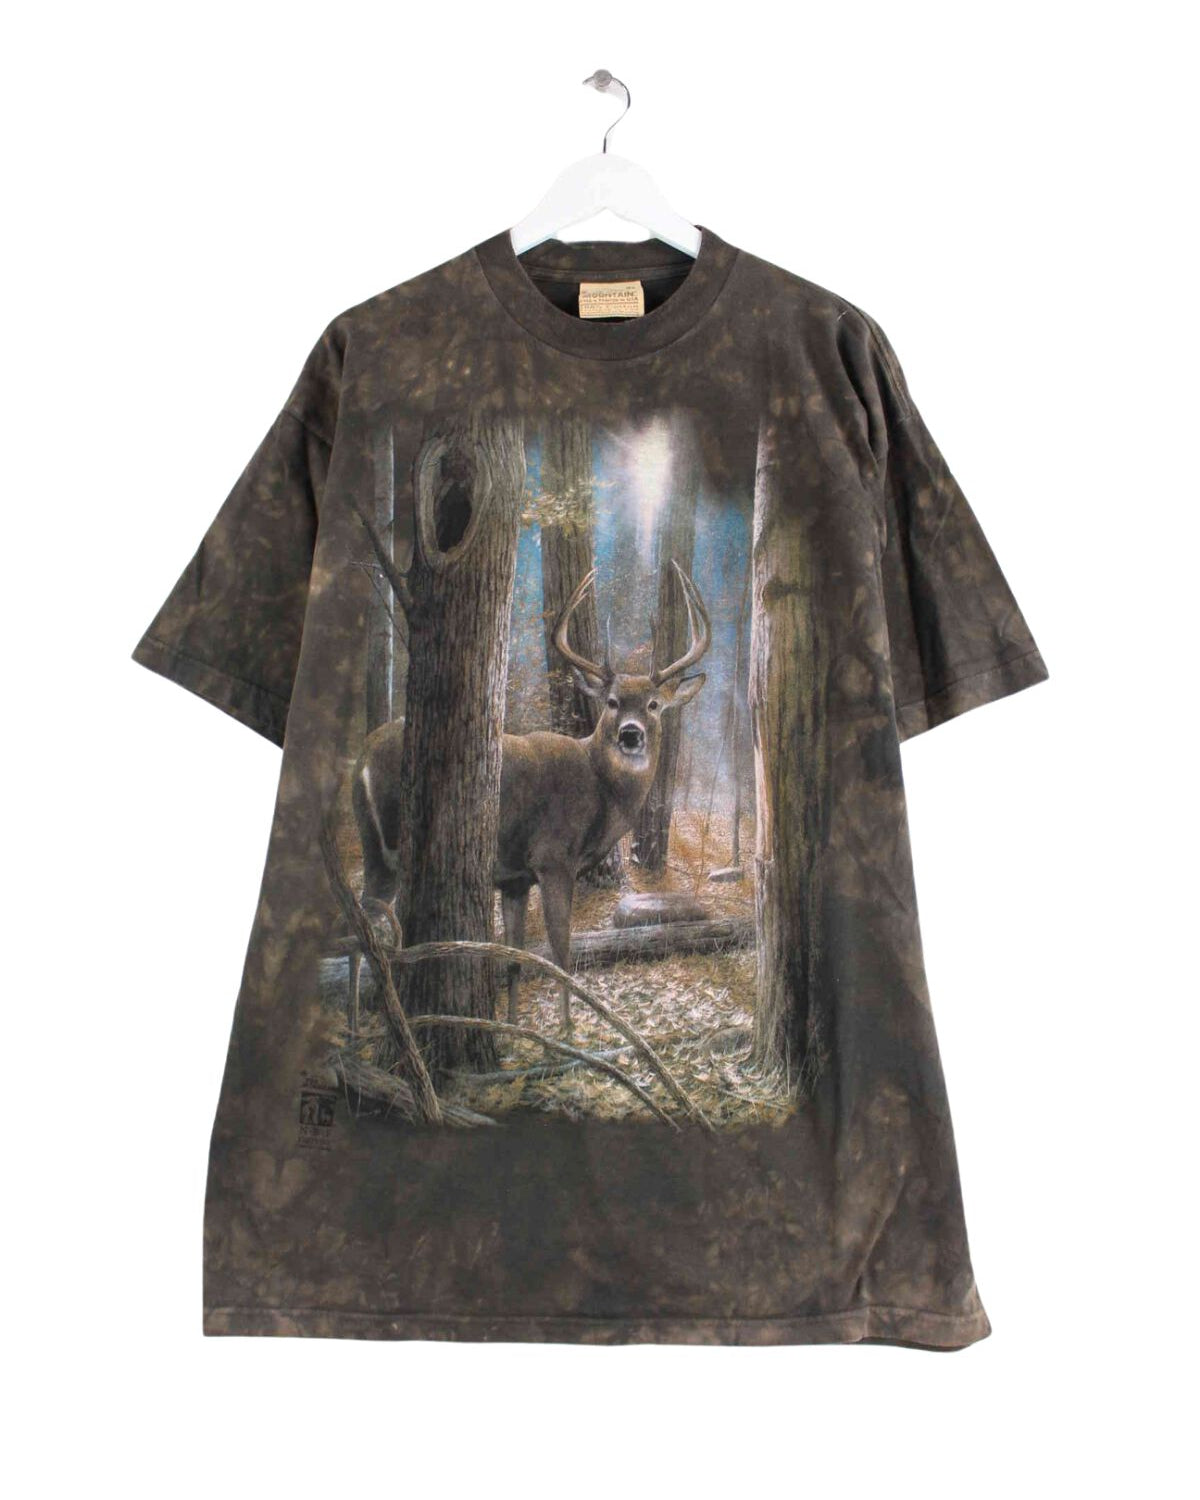 Vintage 90s Deer Print T-Shirt Braun XL (front image)